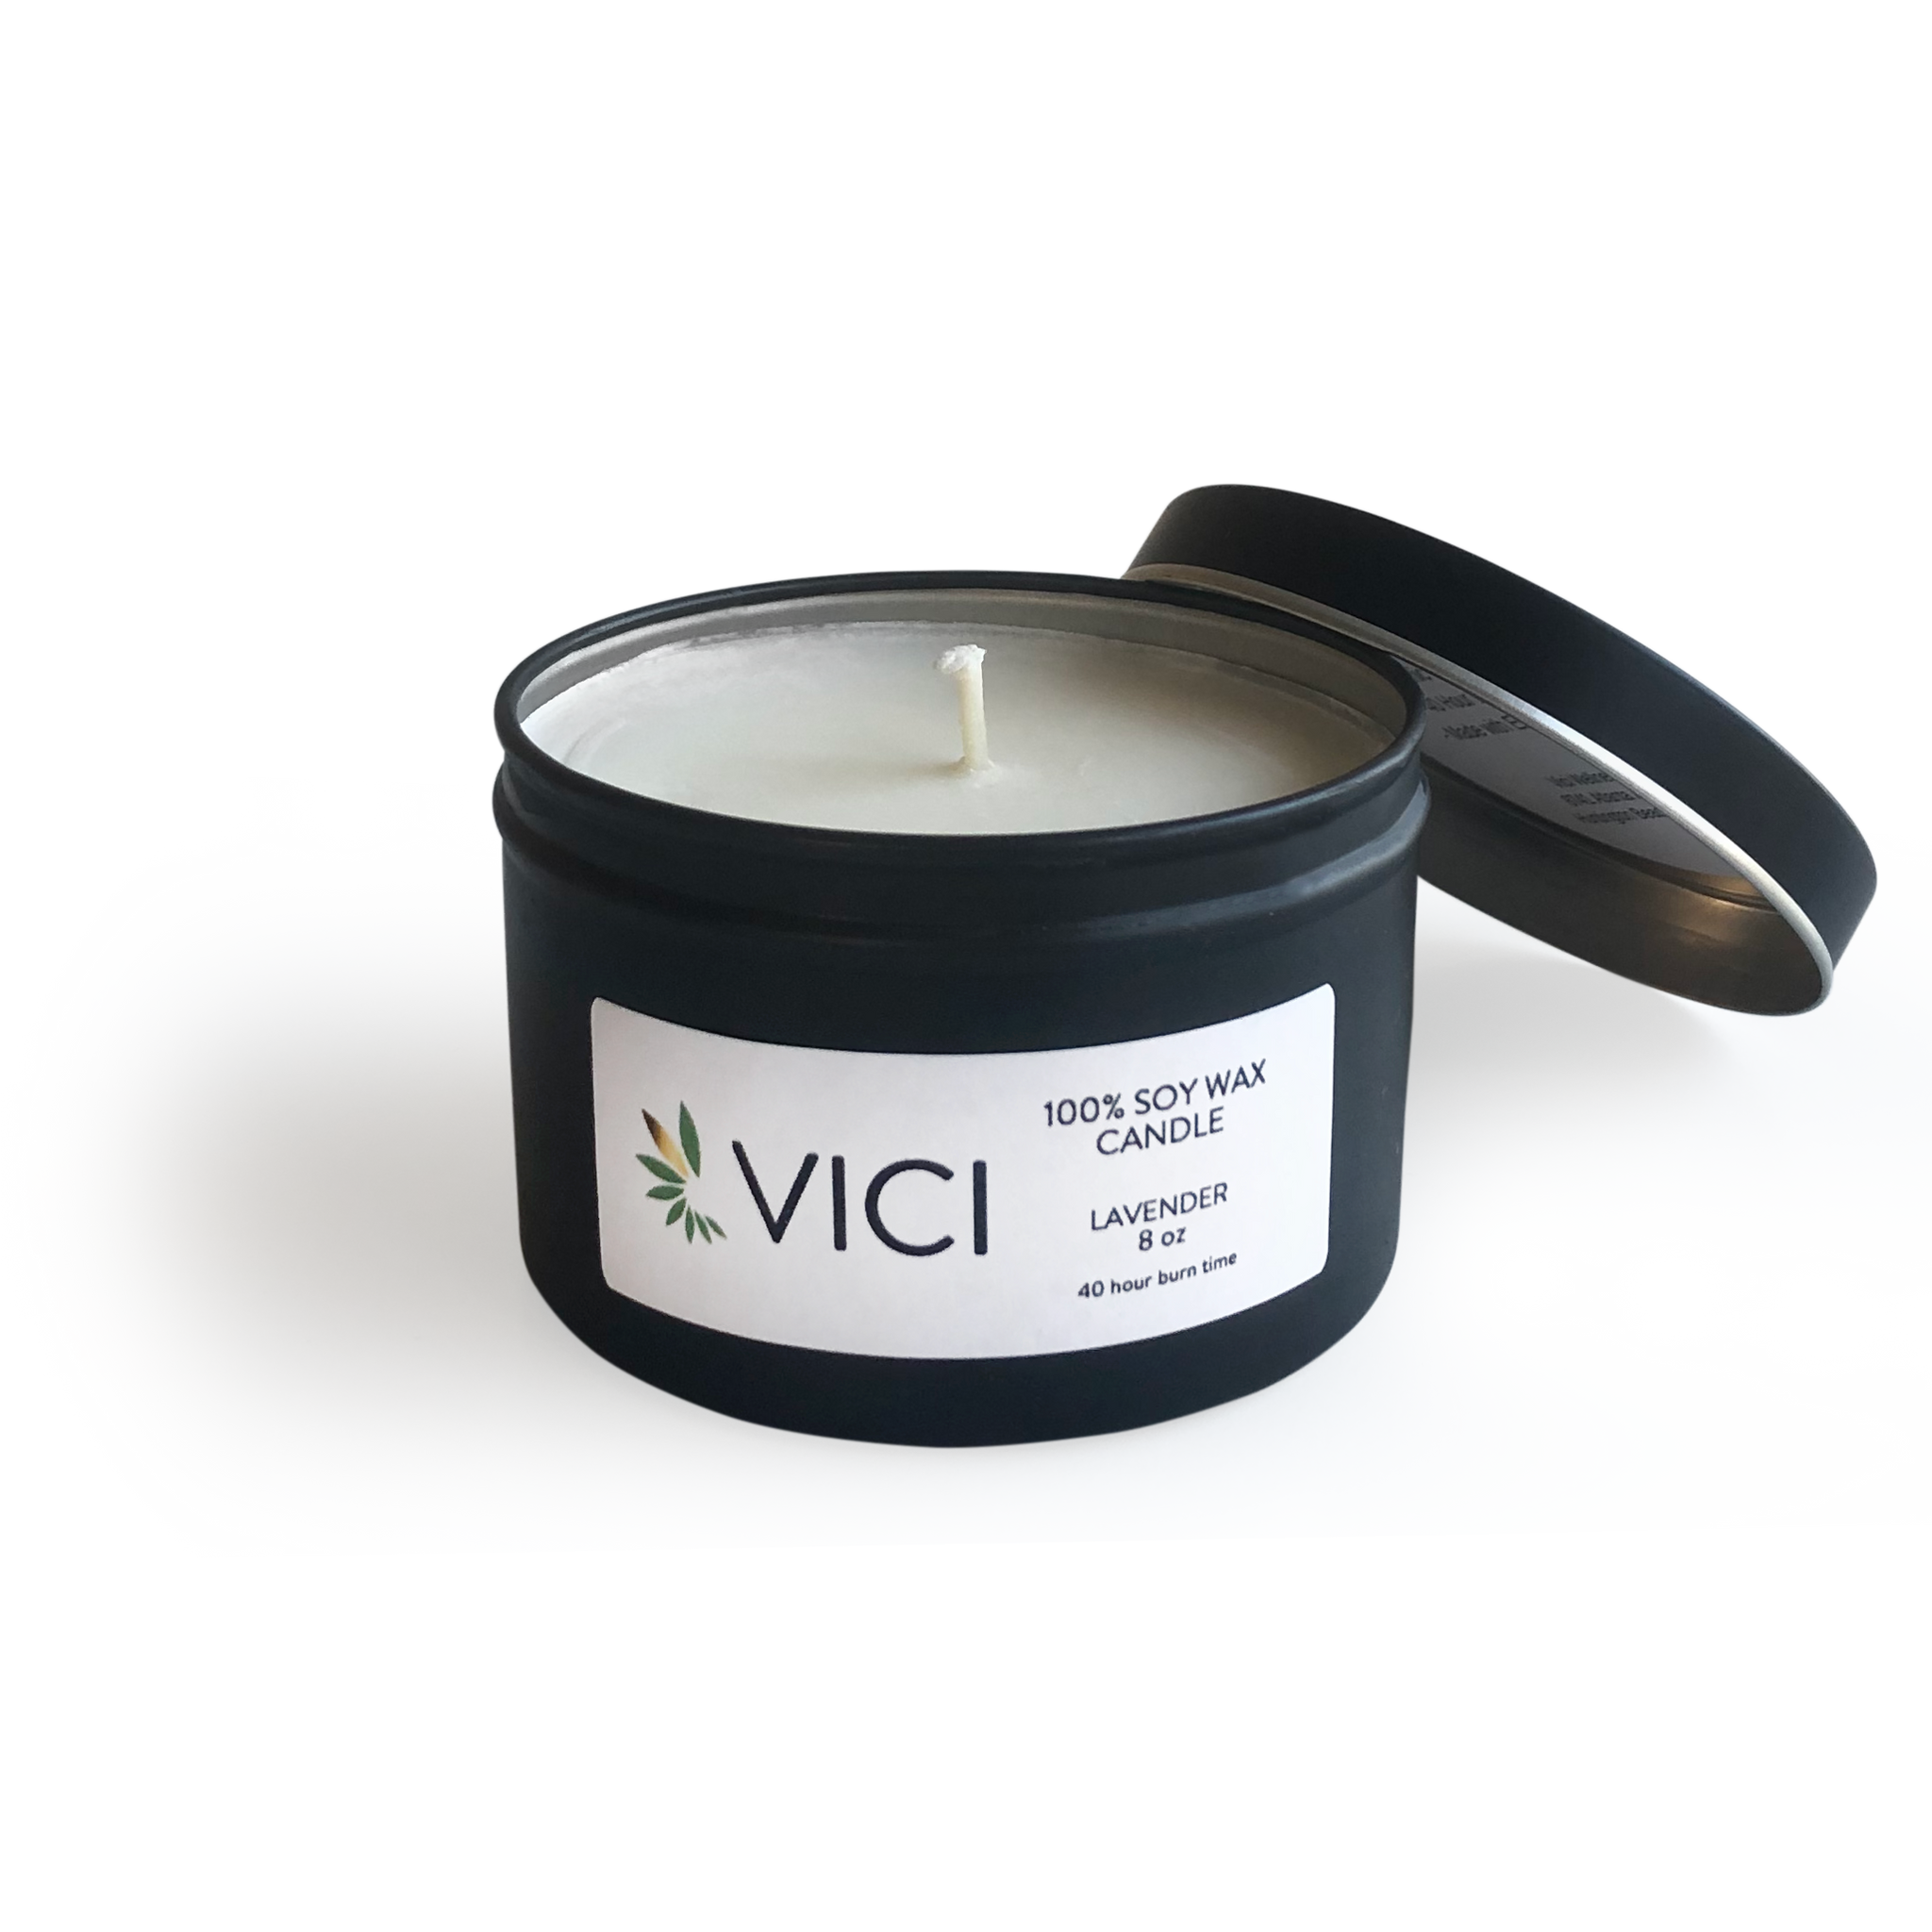 VICI Soy Candles - 8 oz Sleek Black